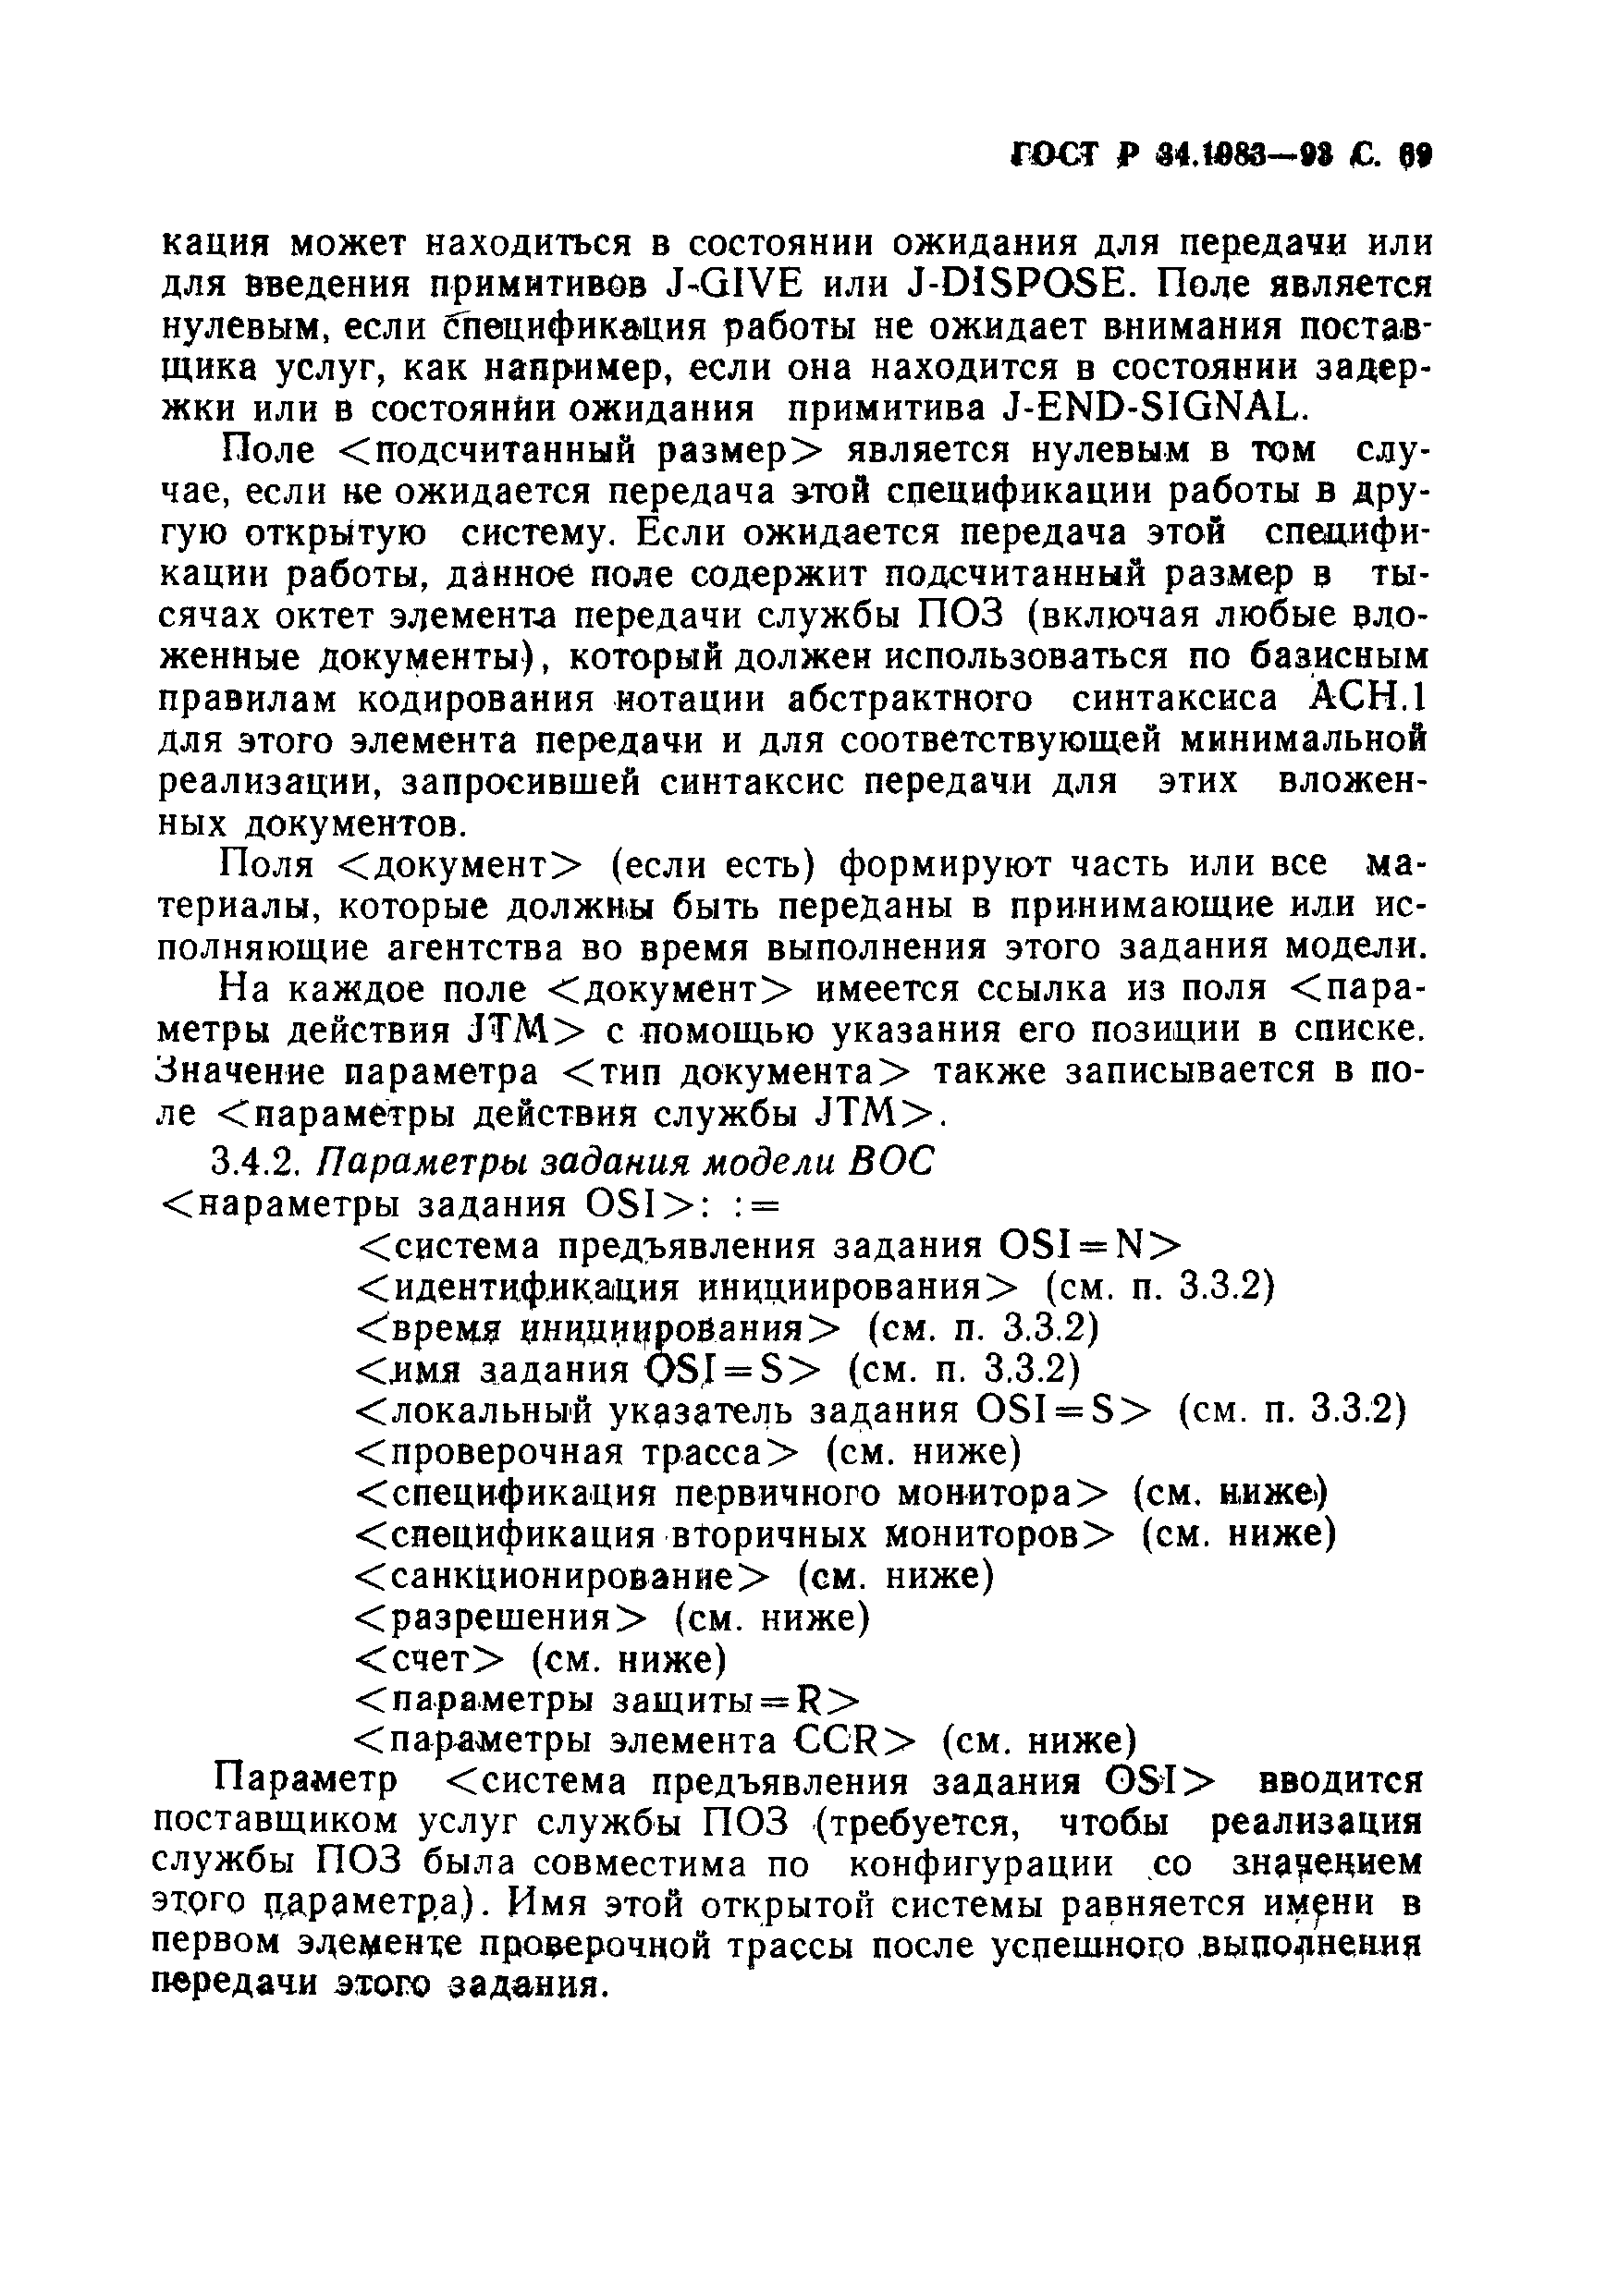 ГОСТ Р 34.1983-93. Страница 70